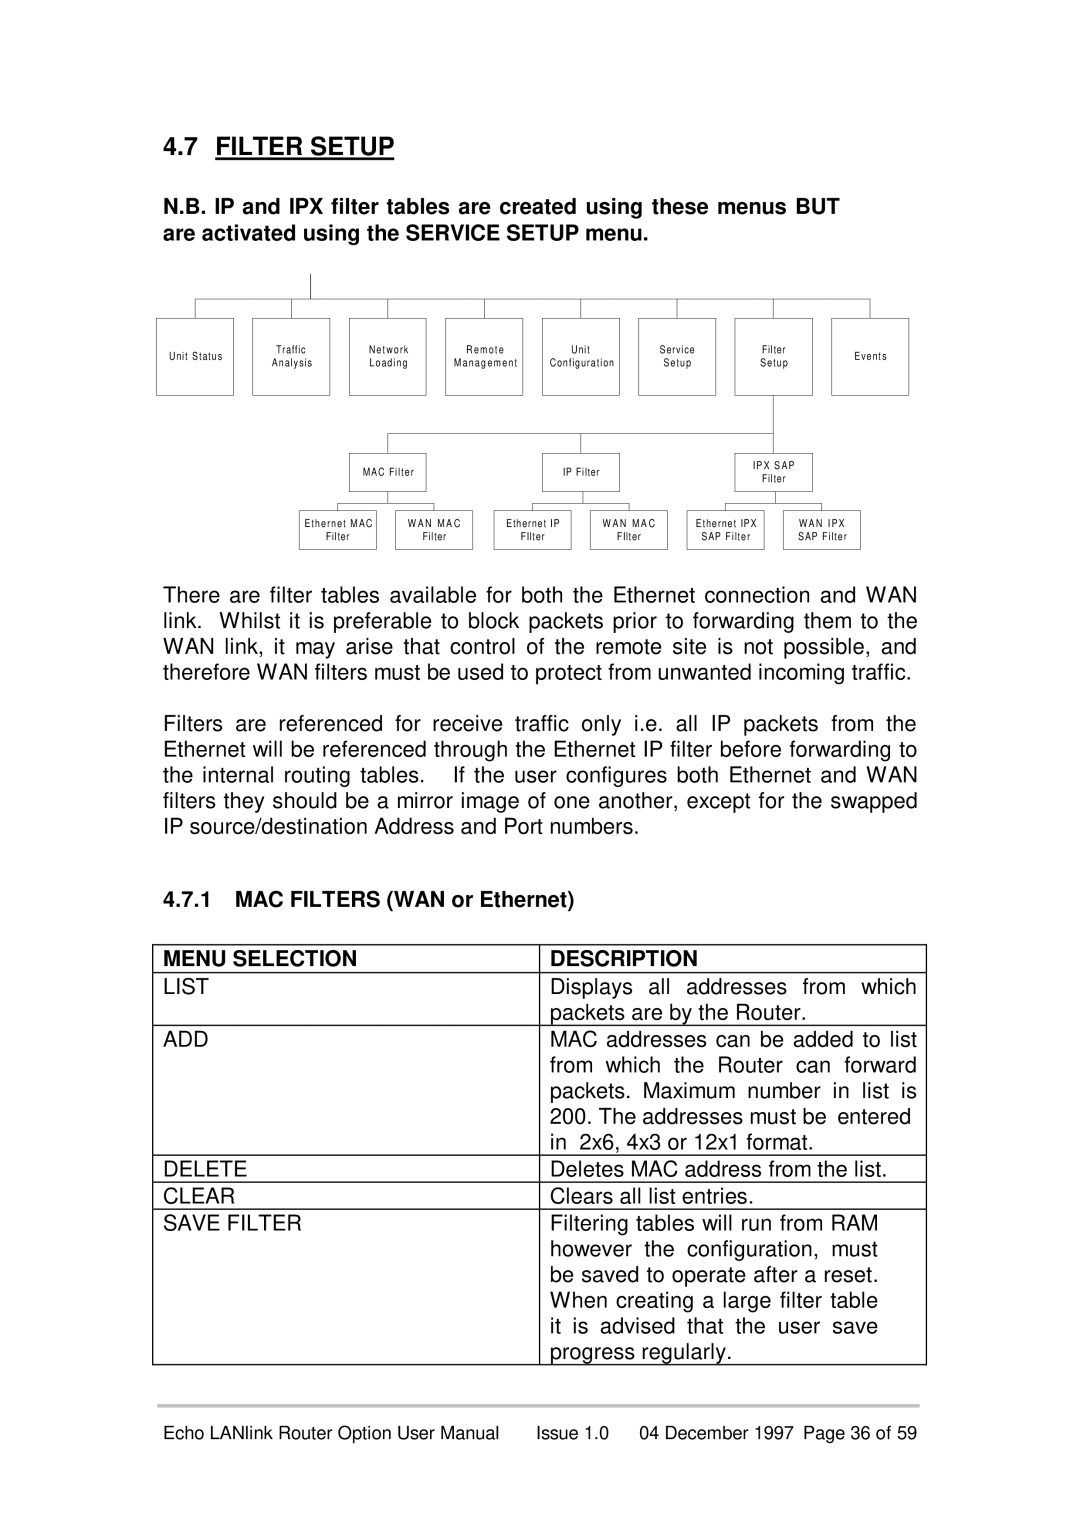 Echo EN55022 manual Filter Setup, MAC FILTERS WAN or Ethernet, Menu Selection, Description 